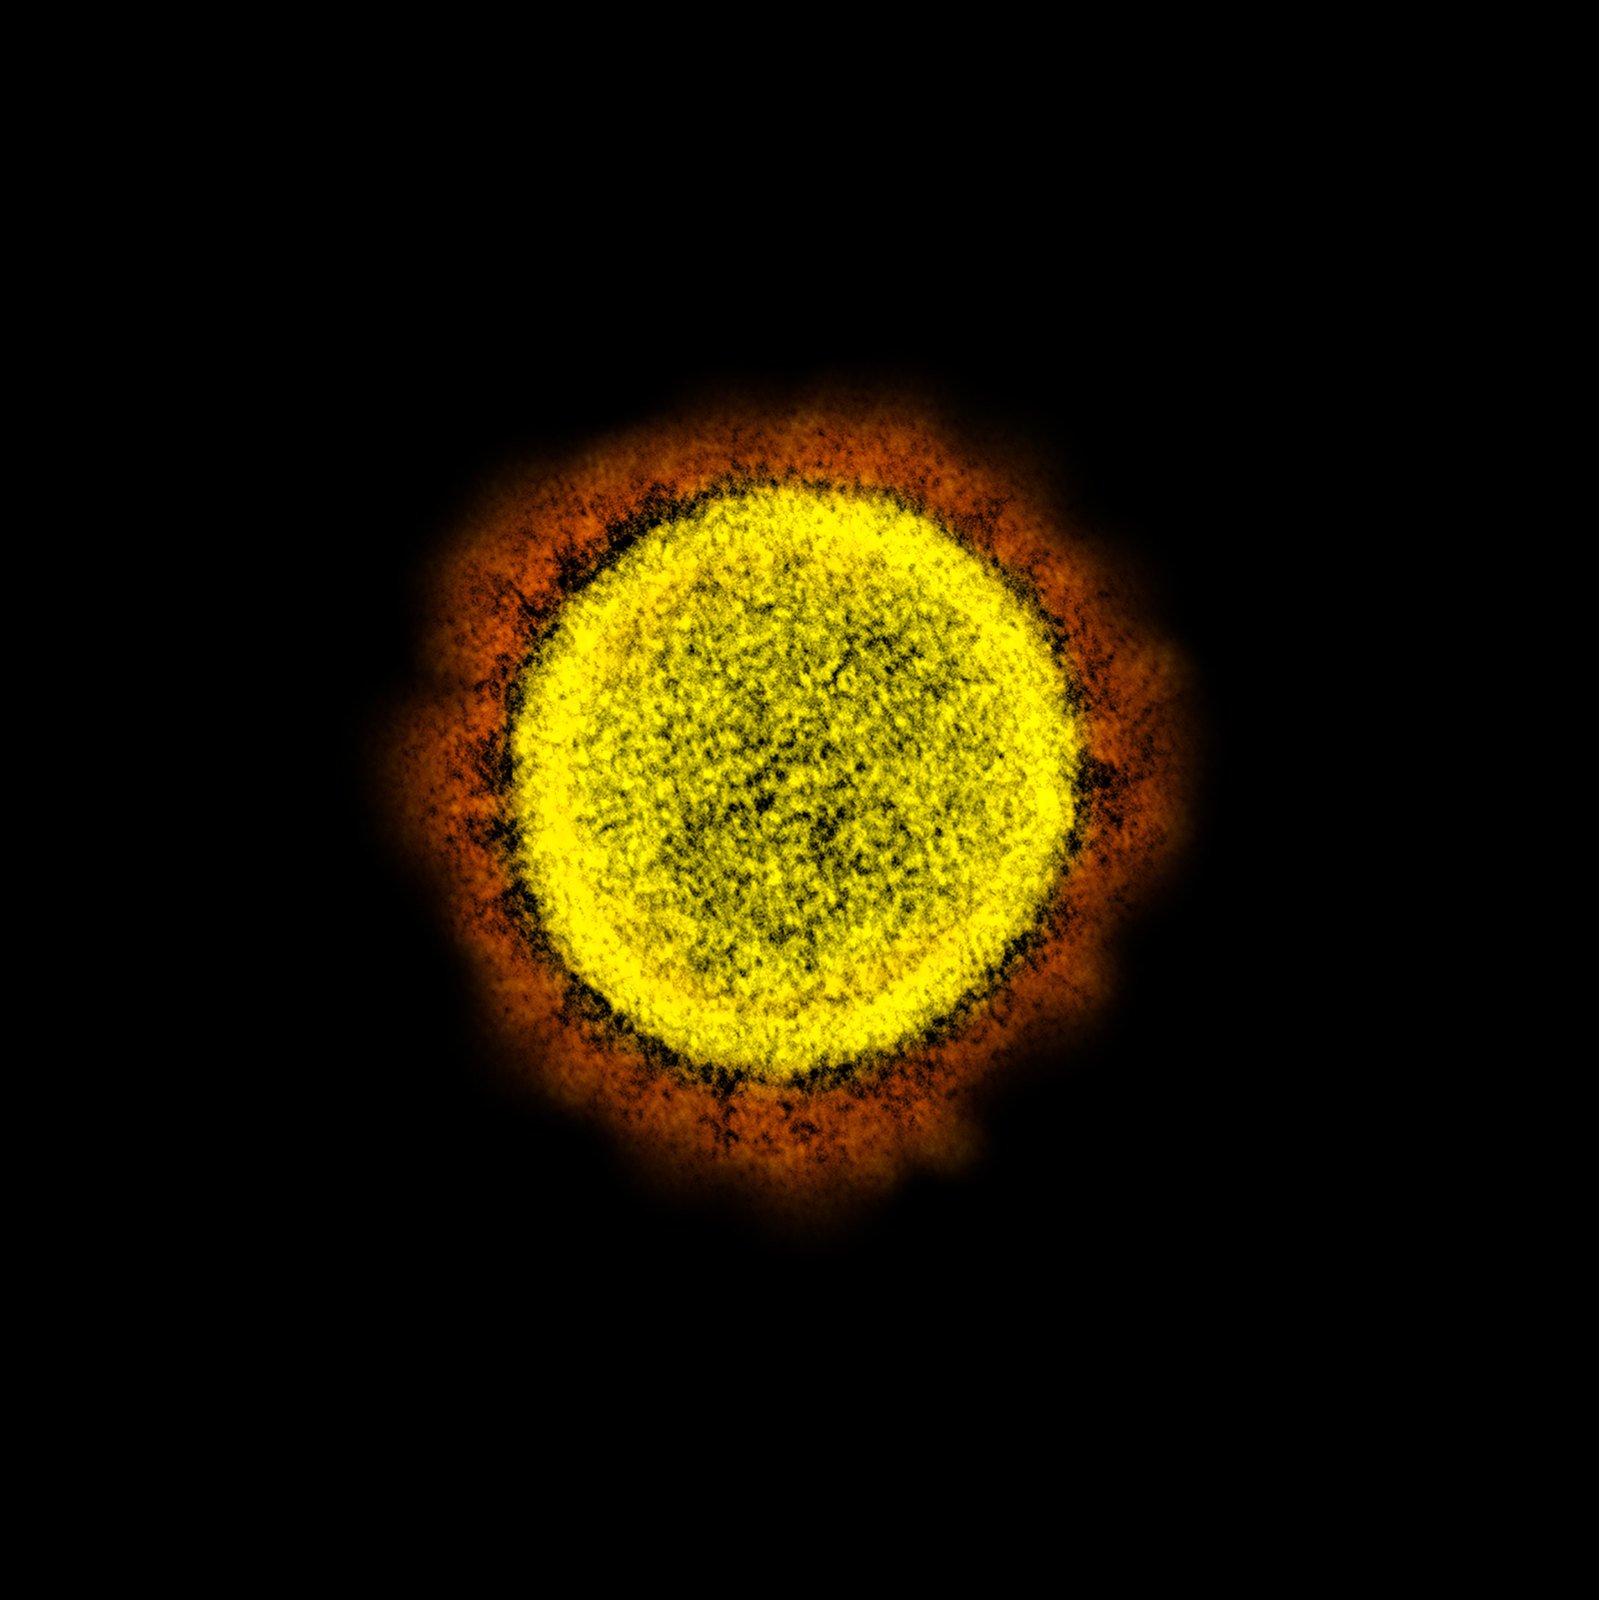 15. Transmission electron micrograph of SARS-CoV-2